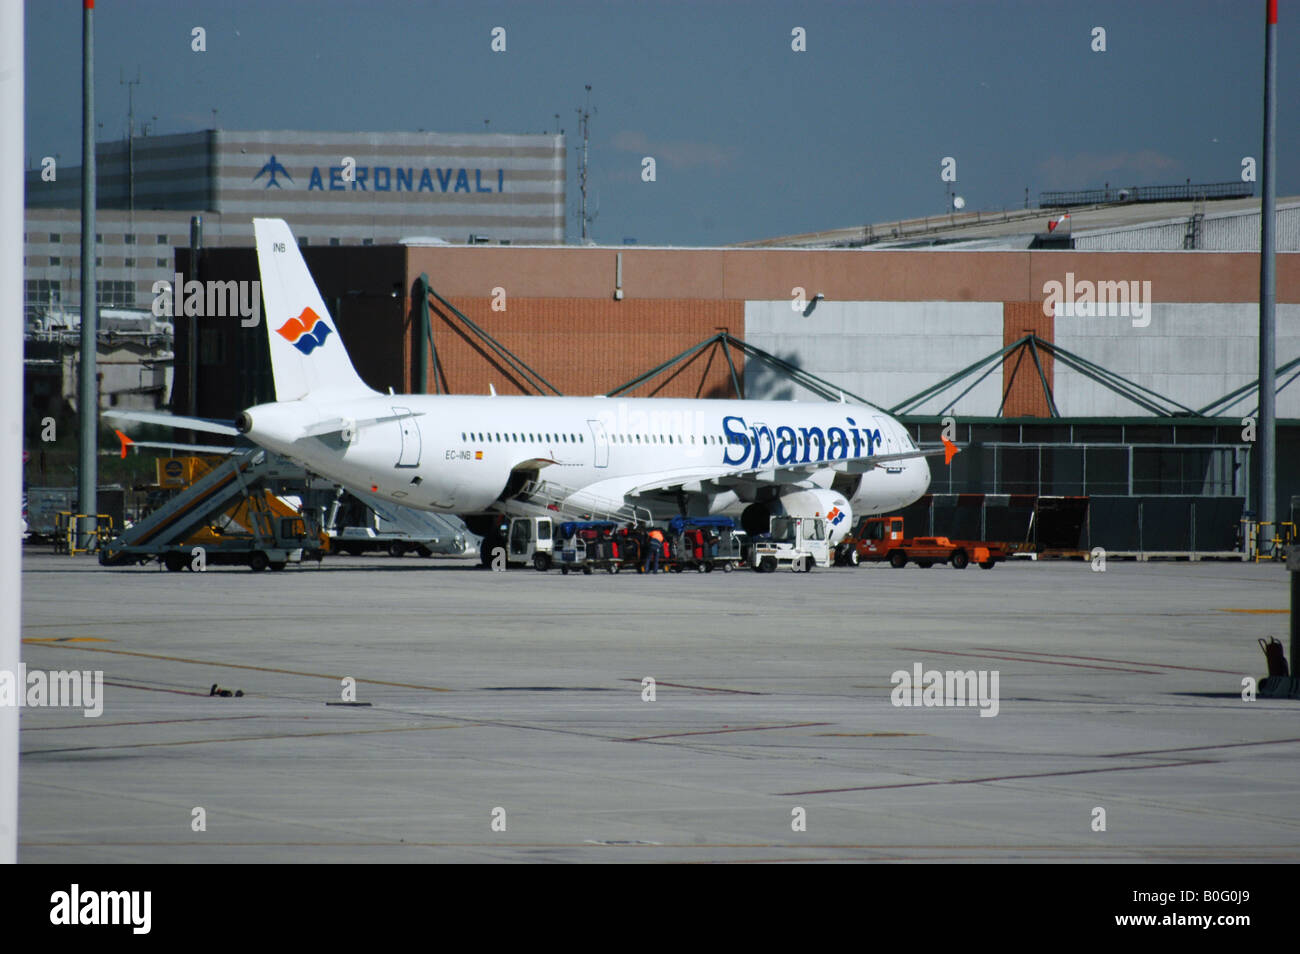 Marco Polo airport in Tessera - Venezia North Italy Stock Photo - Alamy